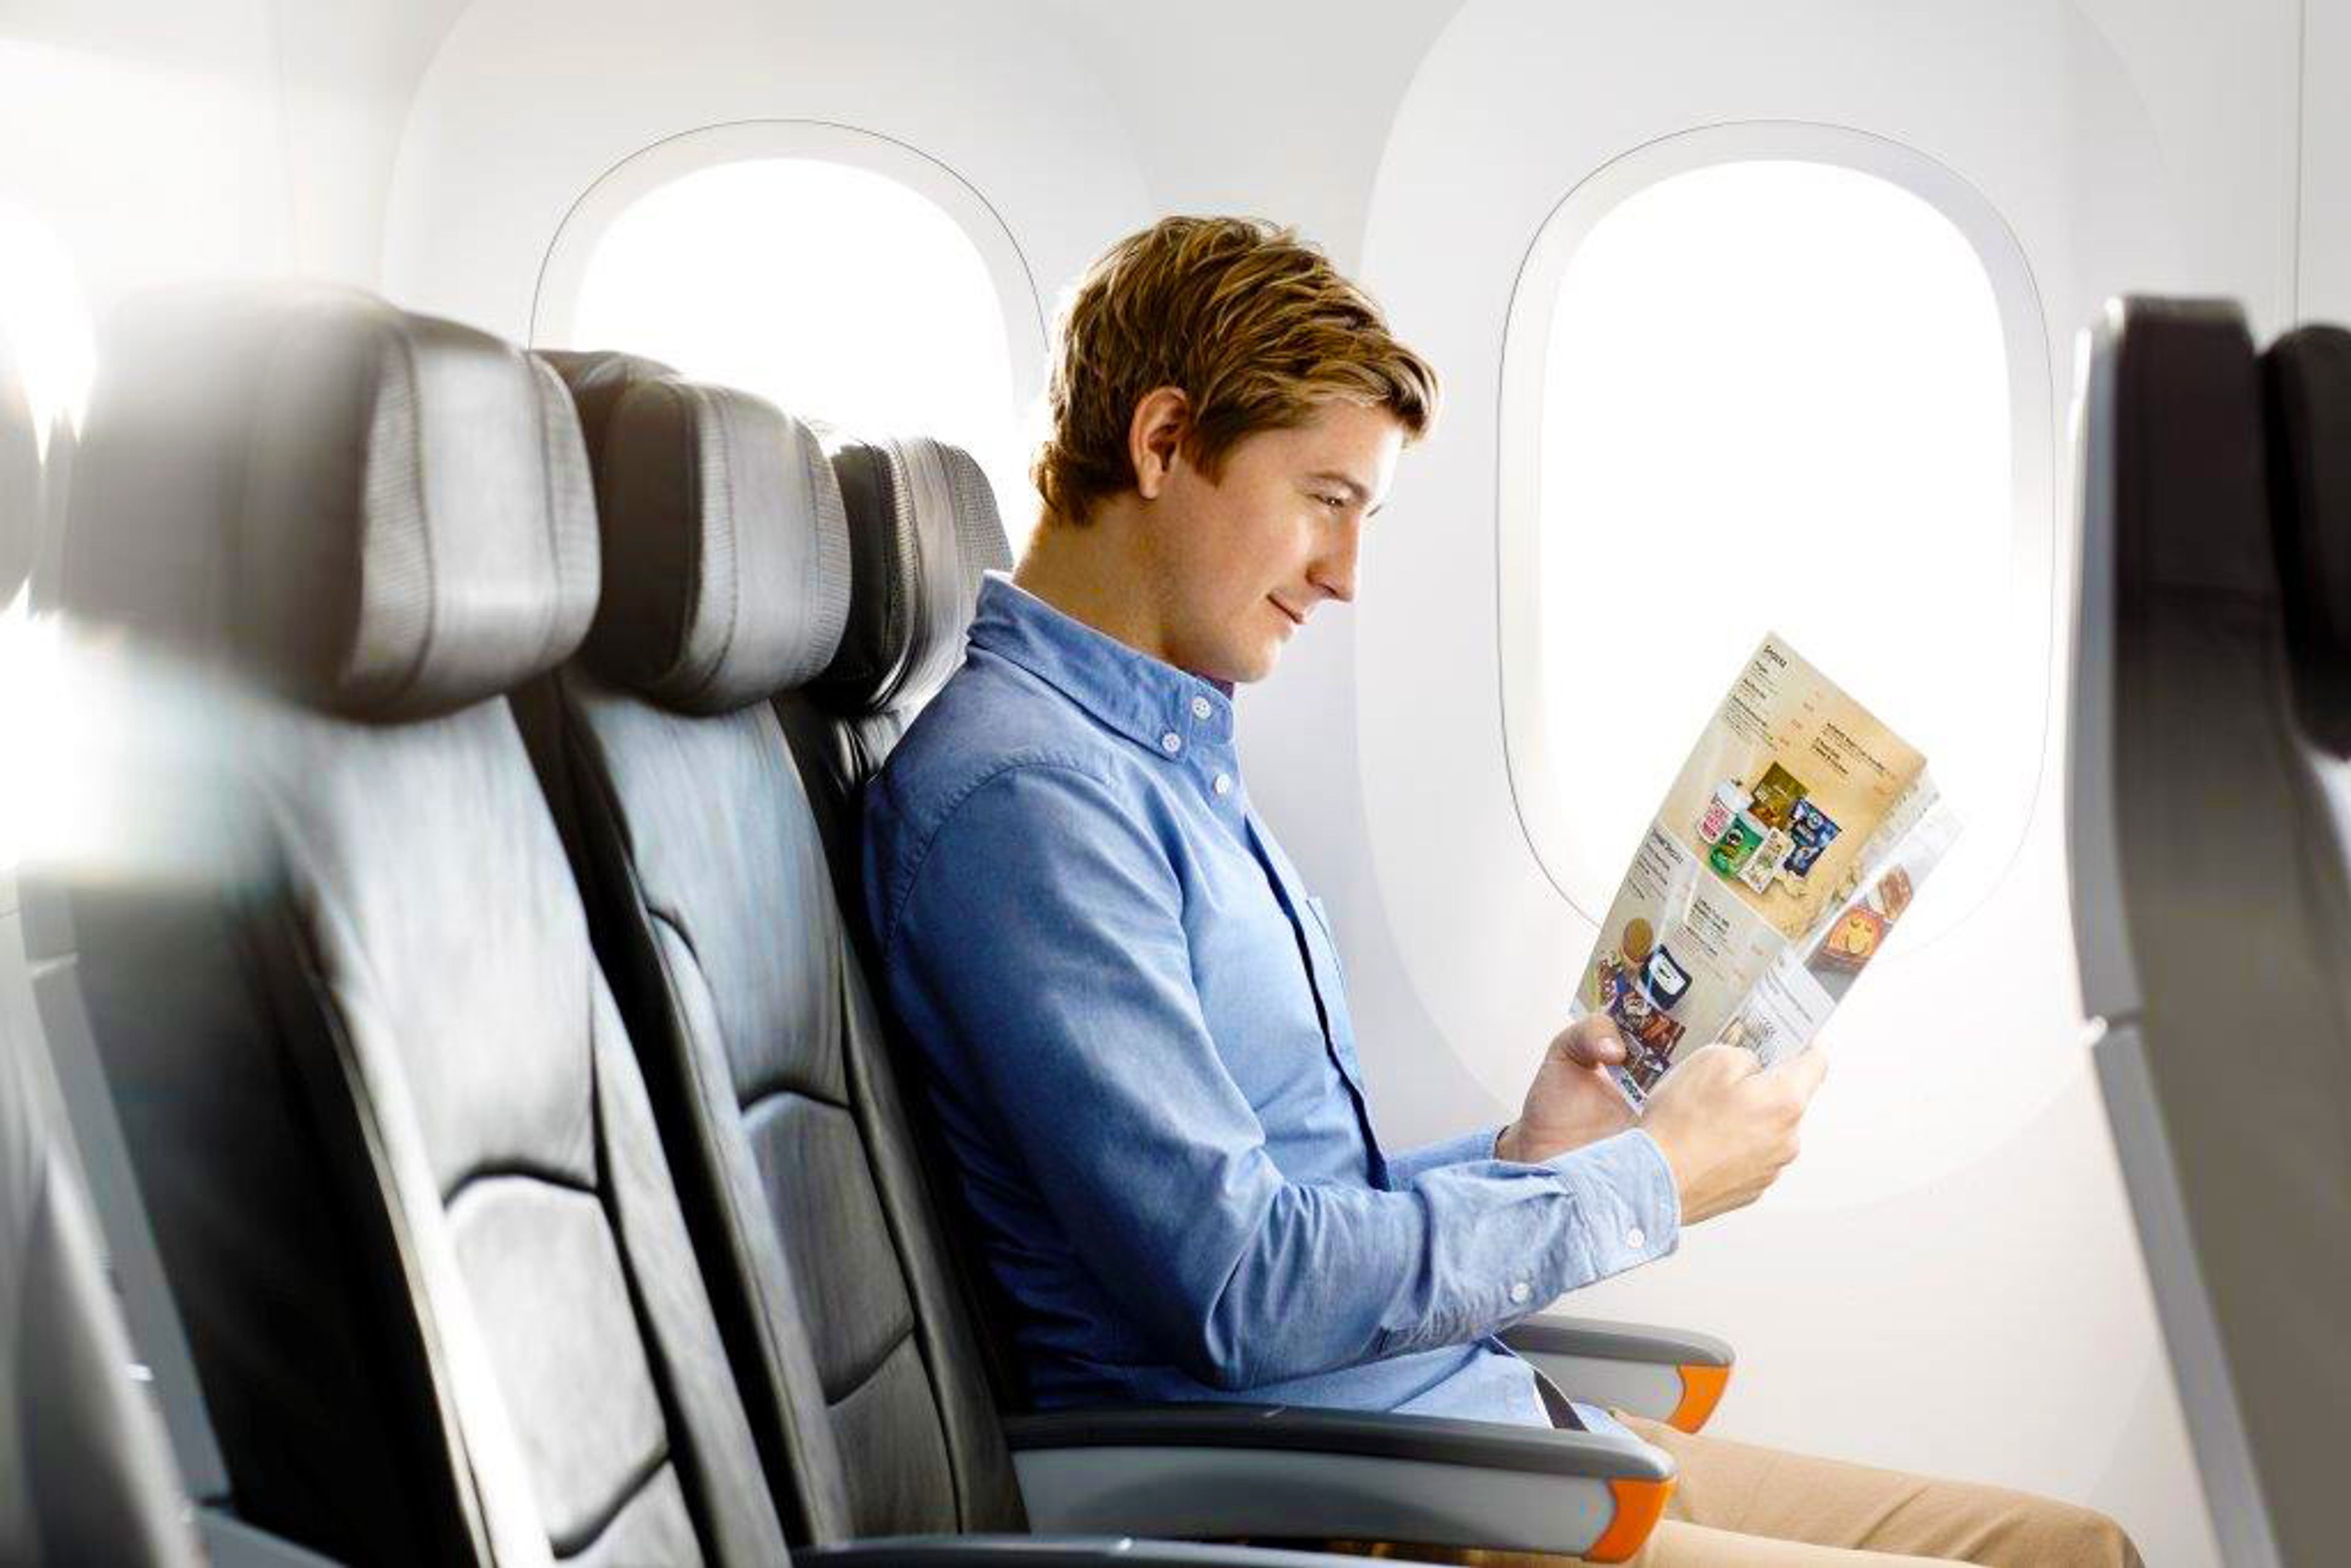 Passenger in airplane seat